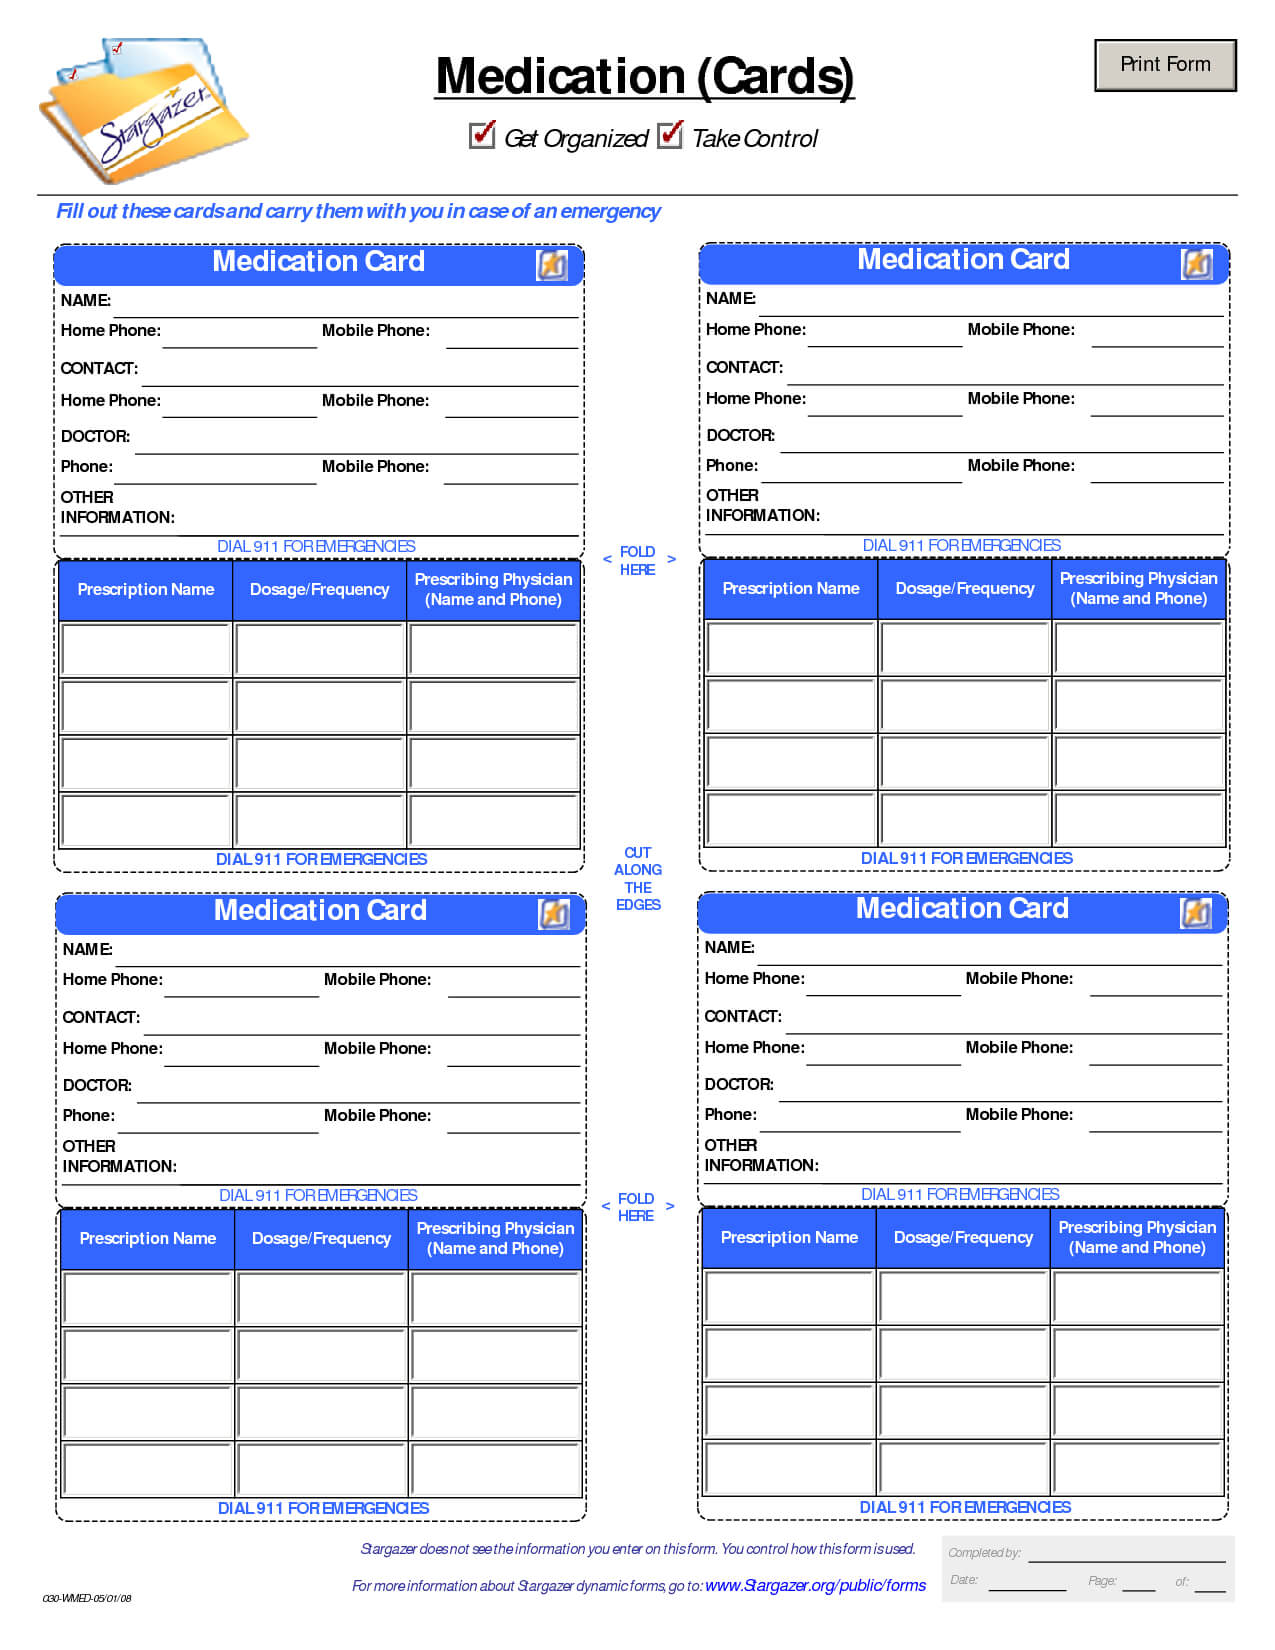 Wallet Card Medication List Template | Arisia 2020 • January With Medical Alert Wallet Card Template